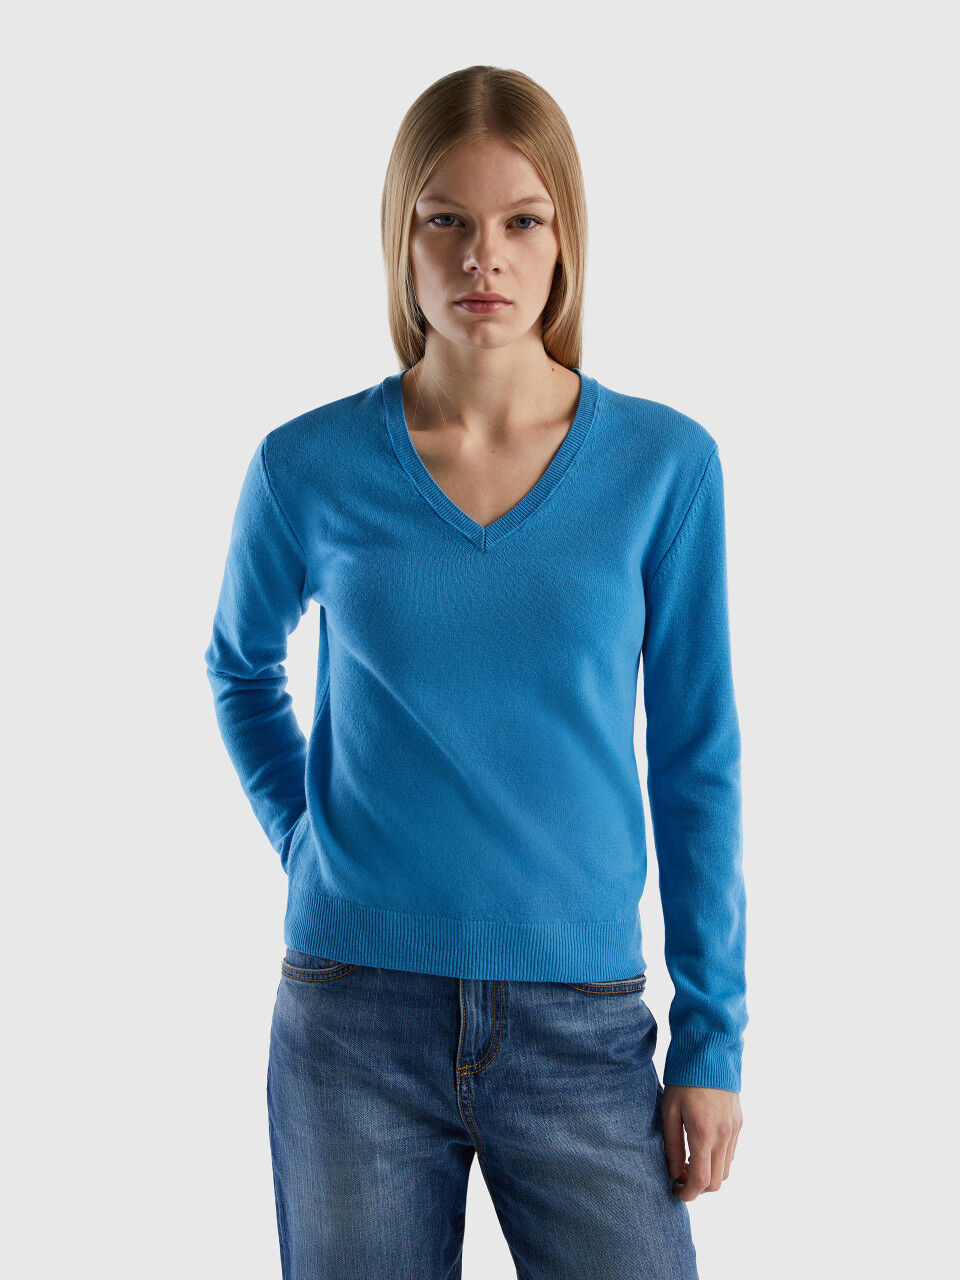 Powder blue V-neck sweater in pure Merino wool